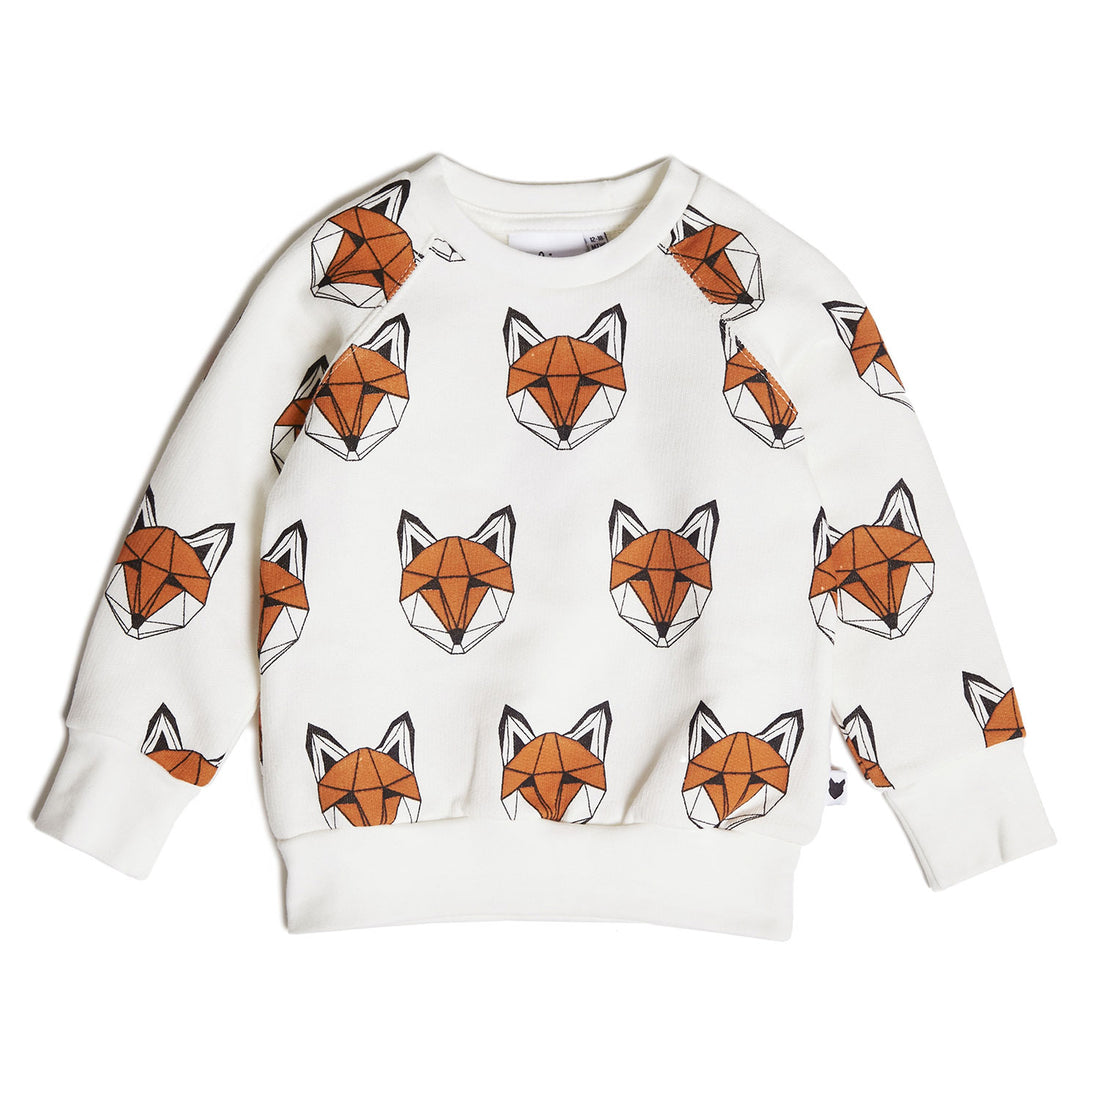 Just Call Me Fox sweatshirt